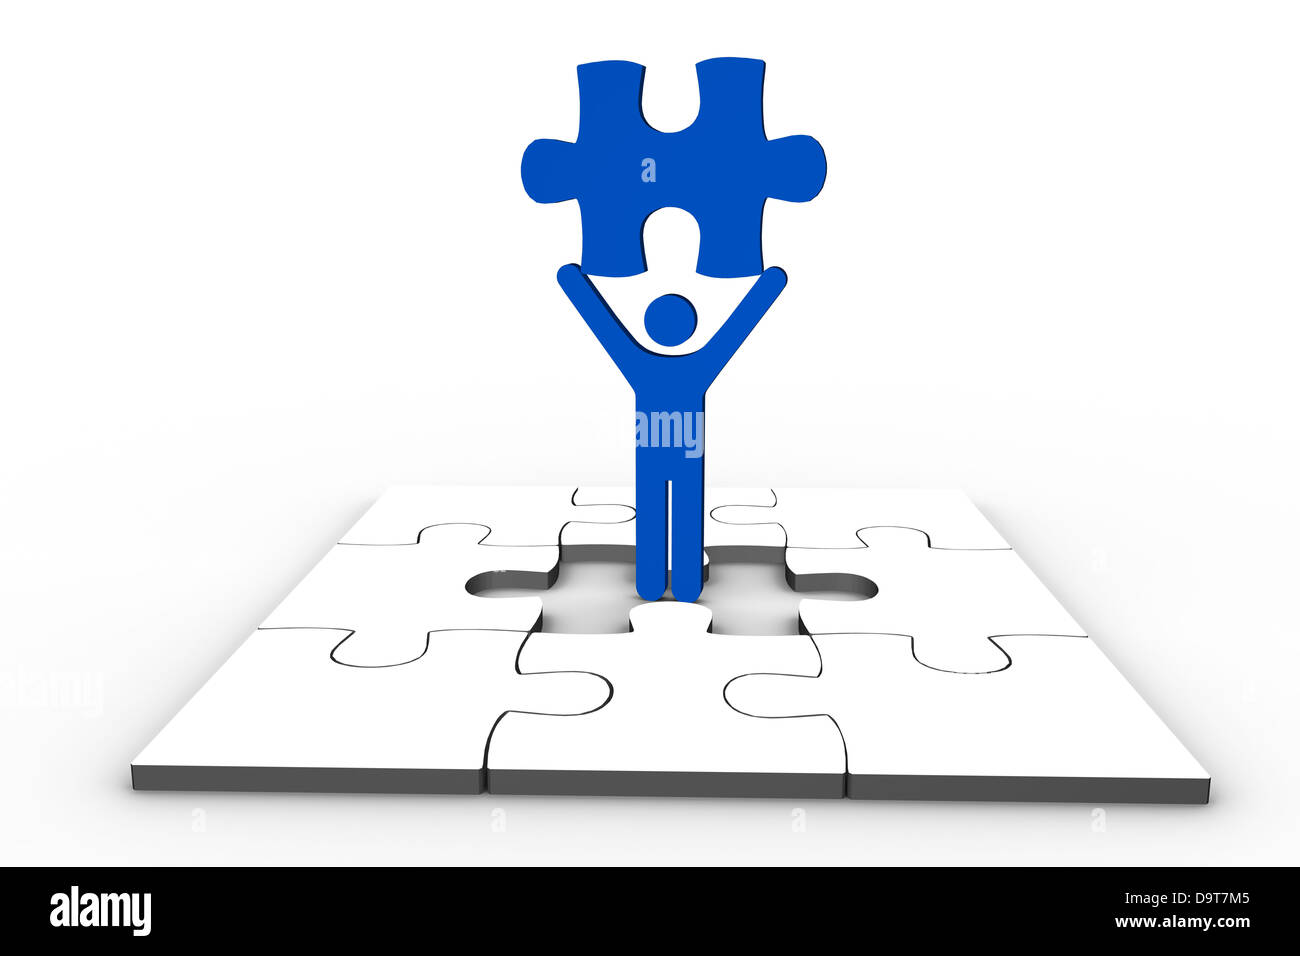 Blue human representation holding jigsaw piece Stock Photo